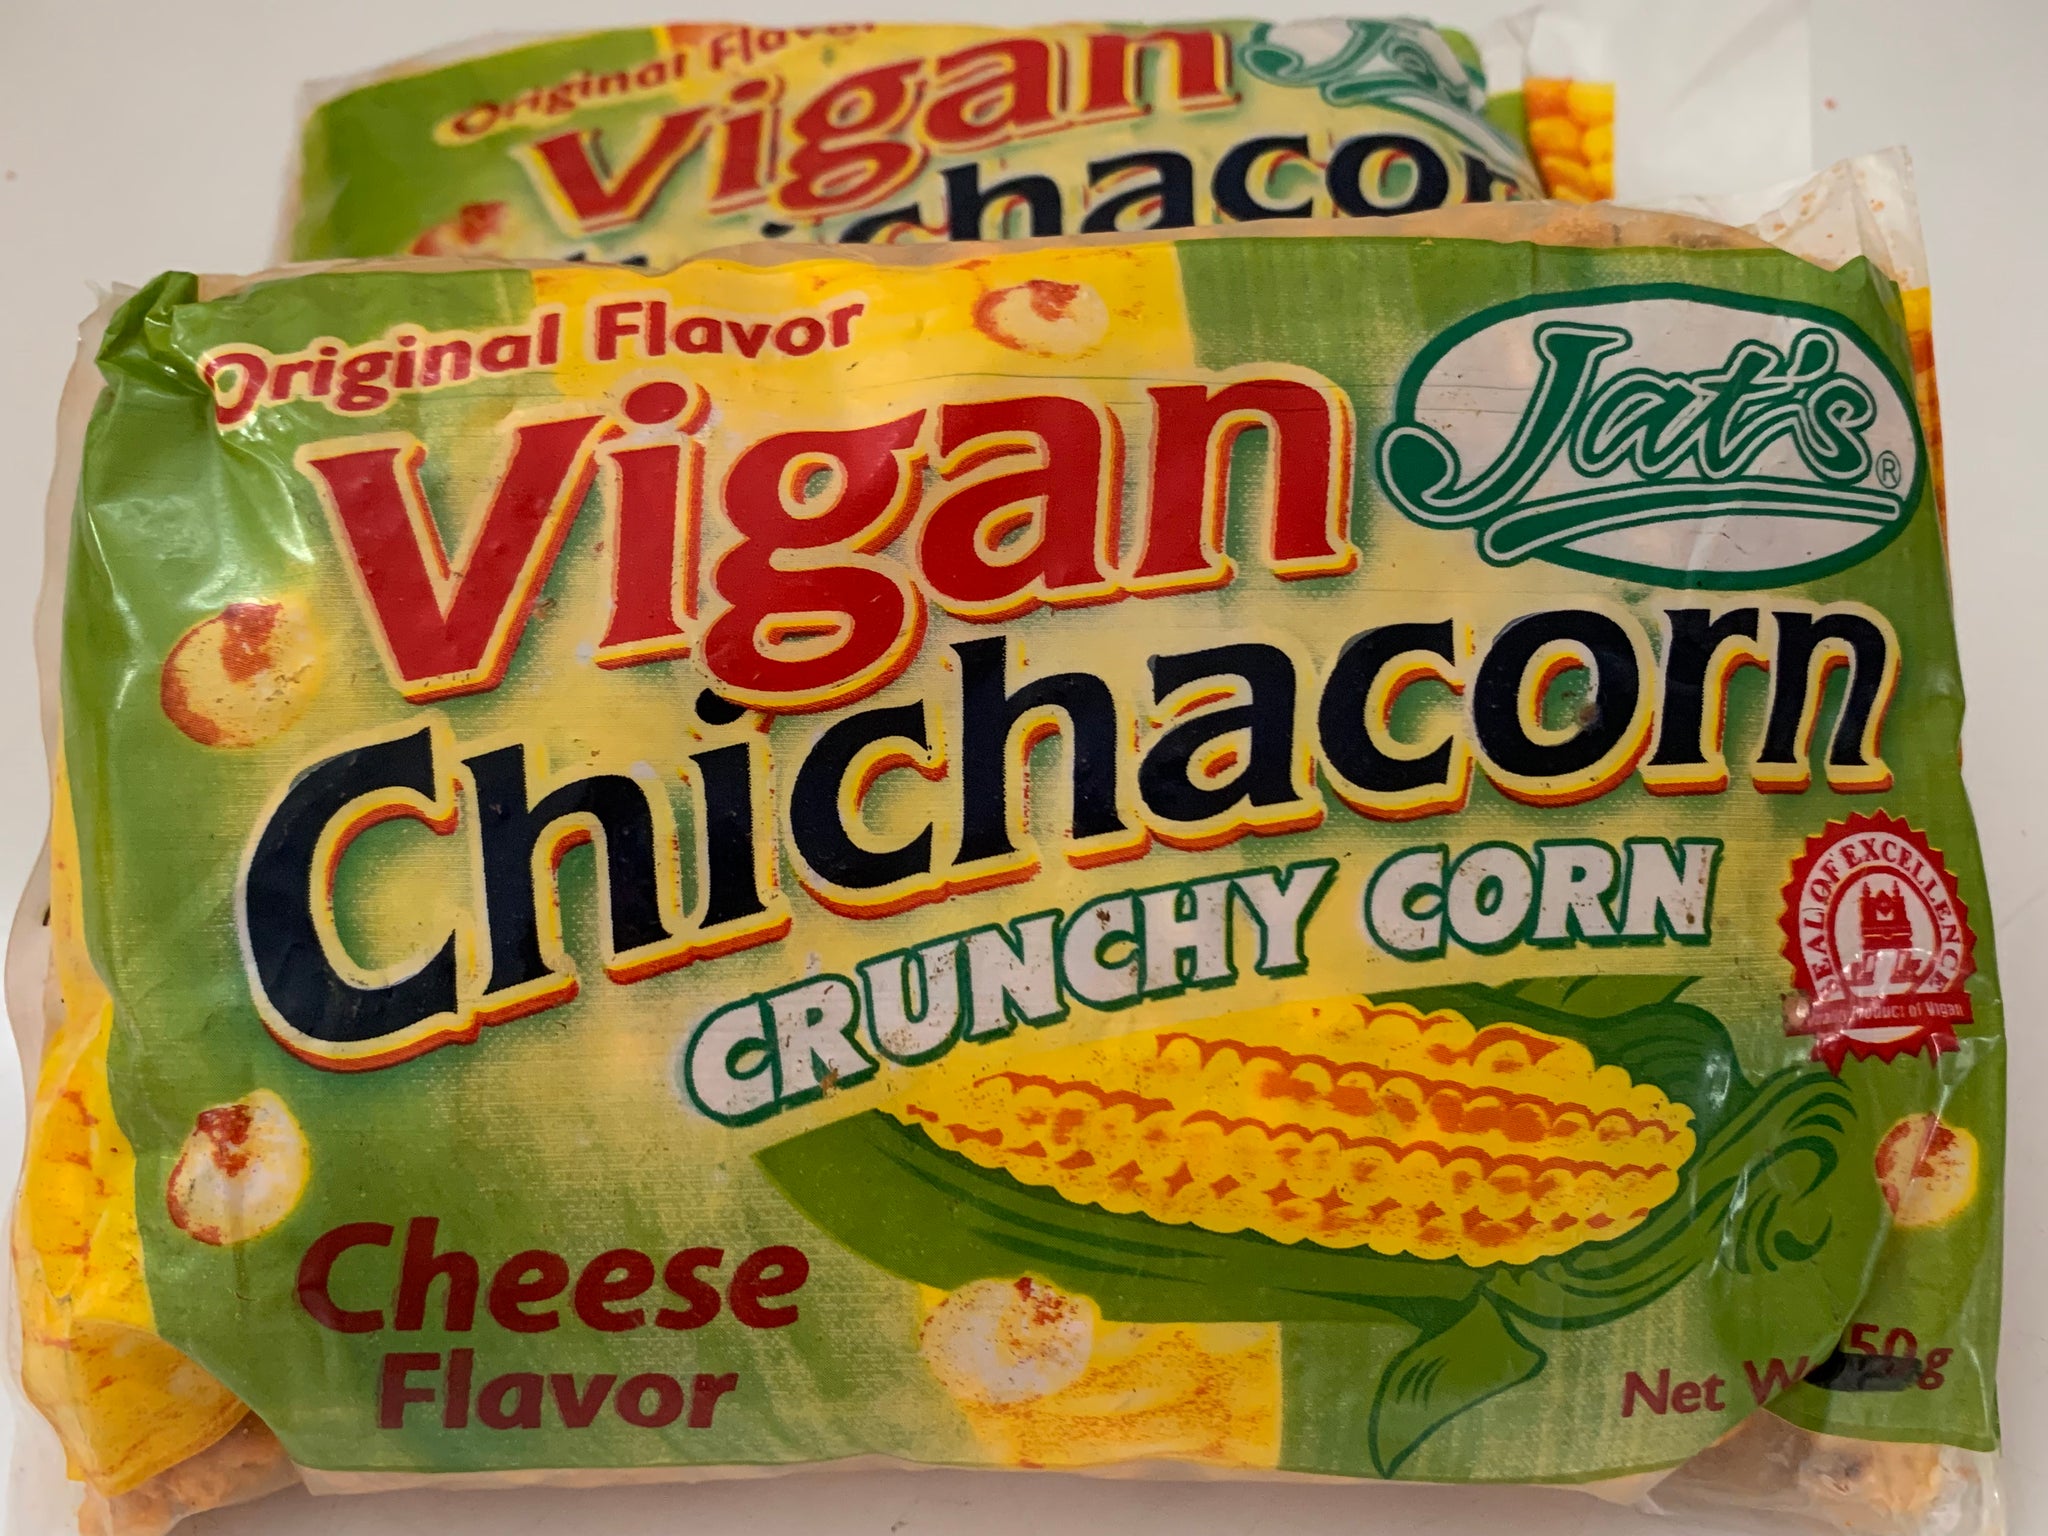 Vigan Chichacorn Cheese Flavor